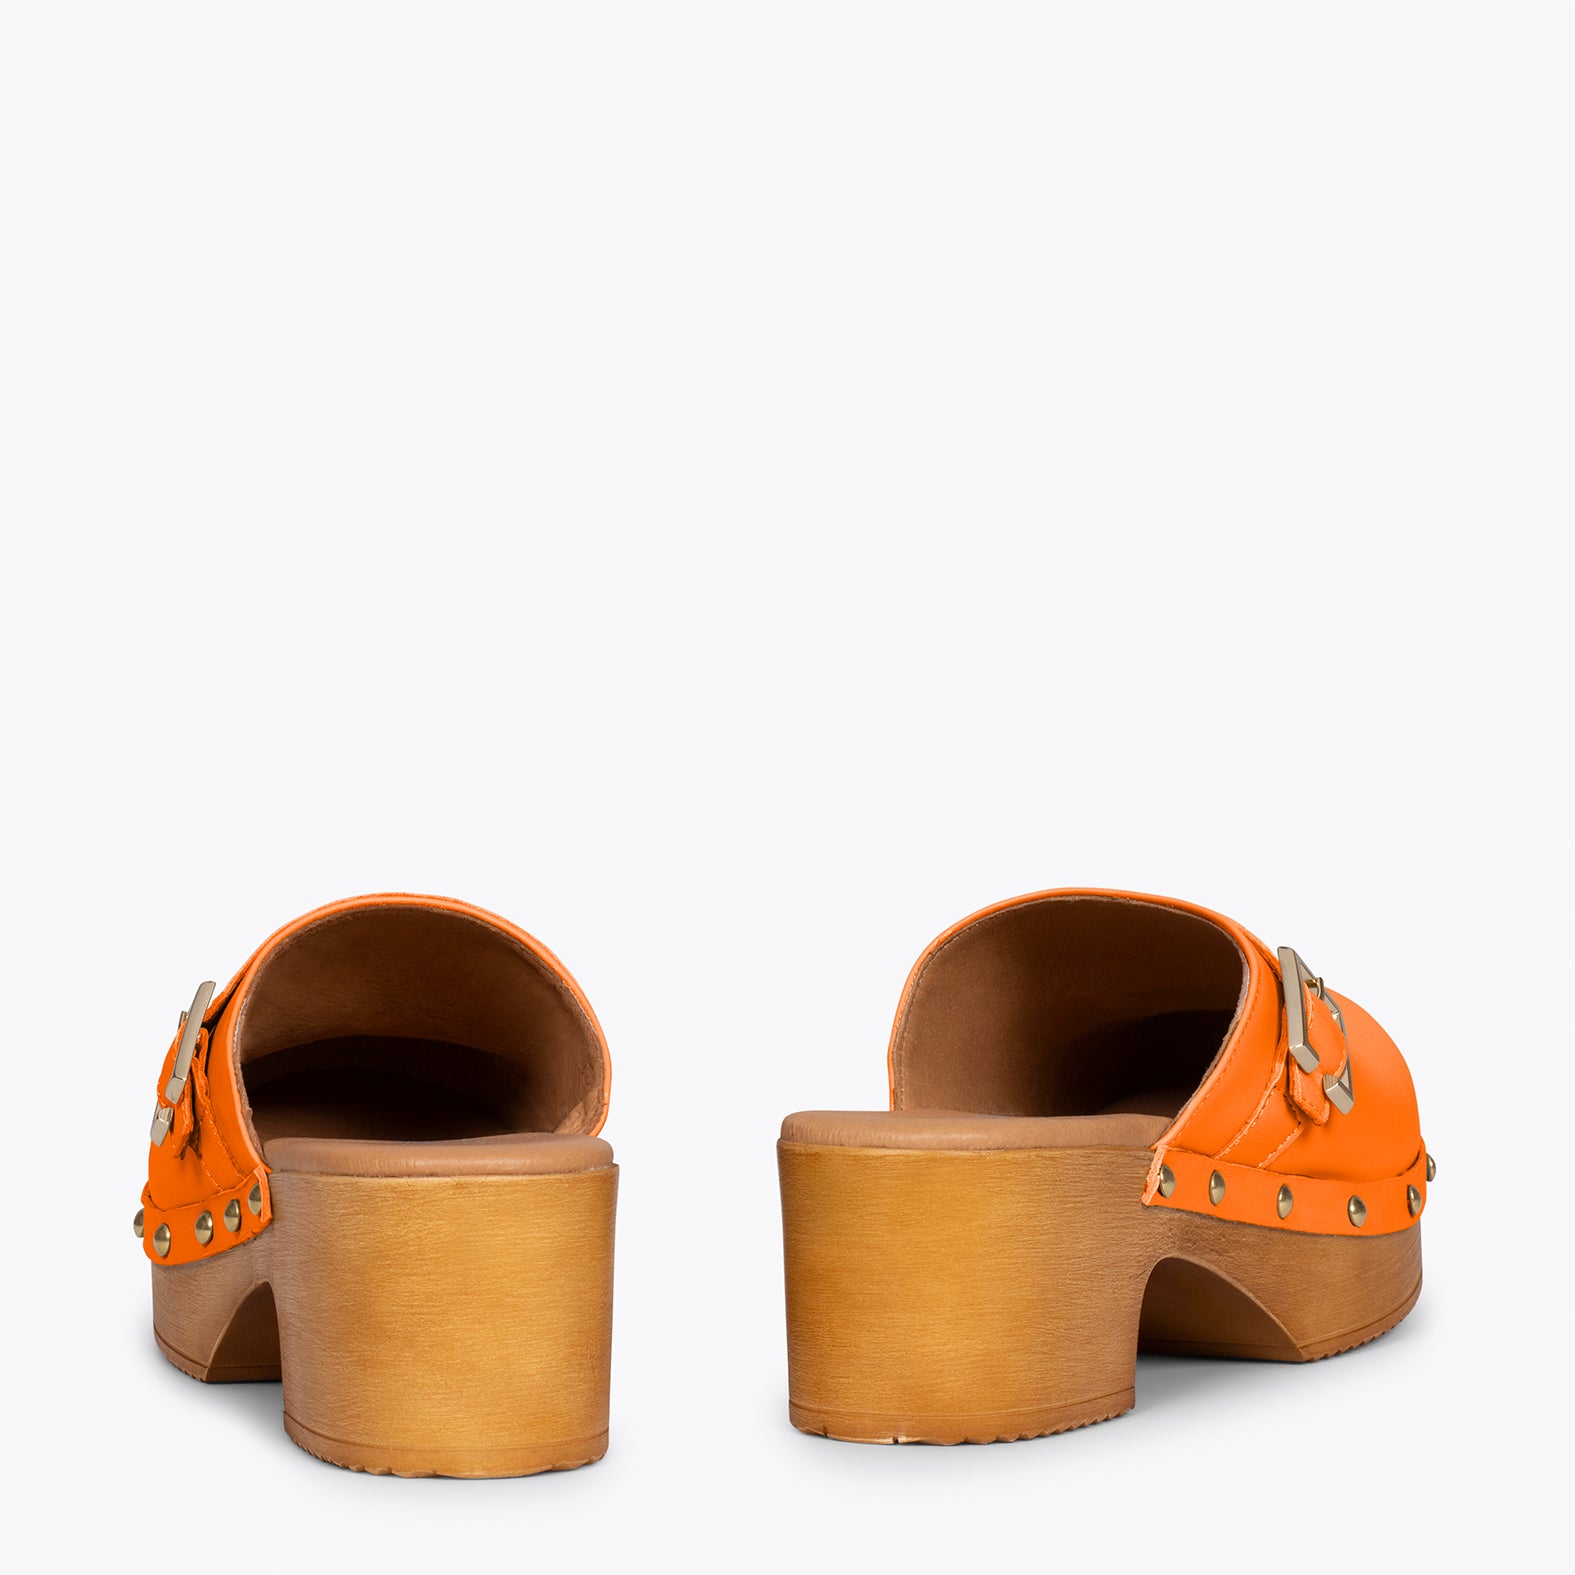 NIZA – ORANGE mules with heel and platform